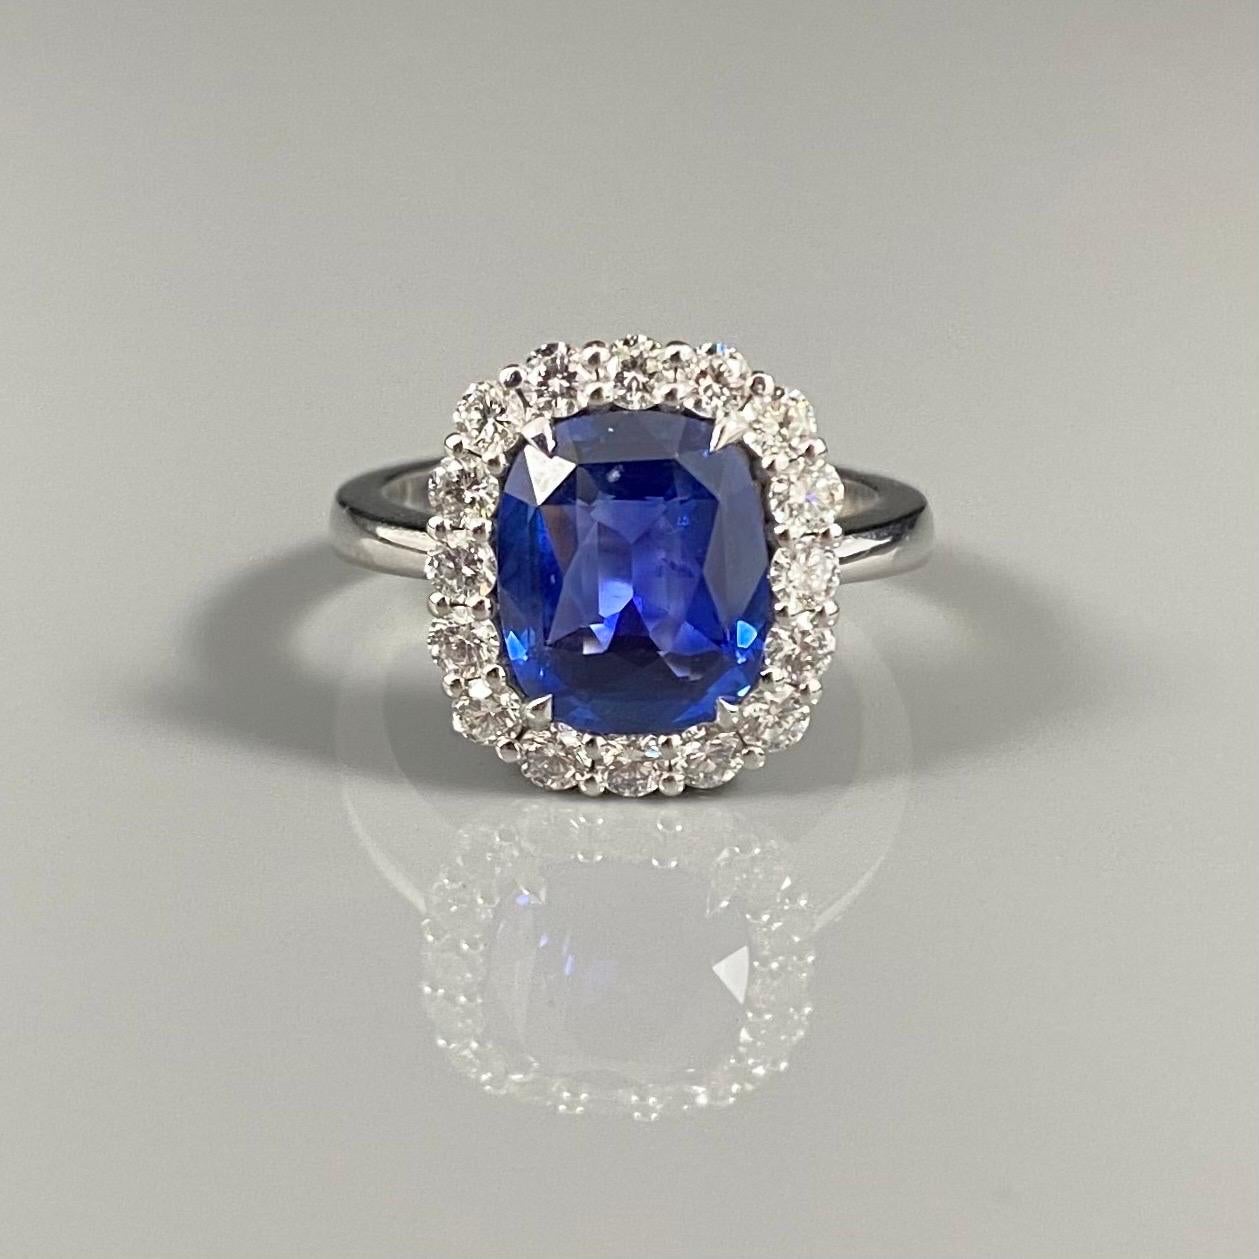 3.1 Carat Cornflower Blue Sapphire Diamond Cluster Engagement Ring White Gold 6